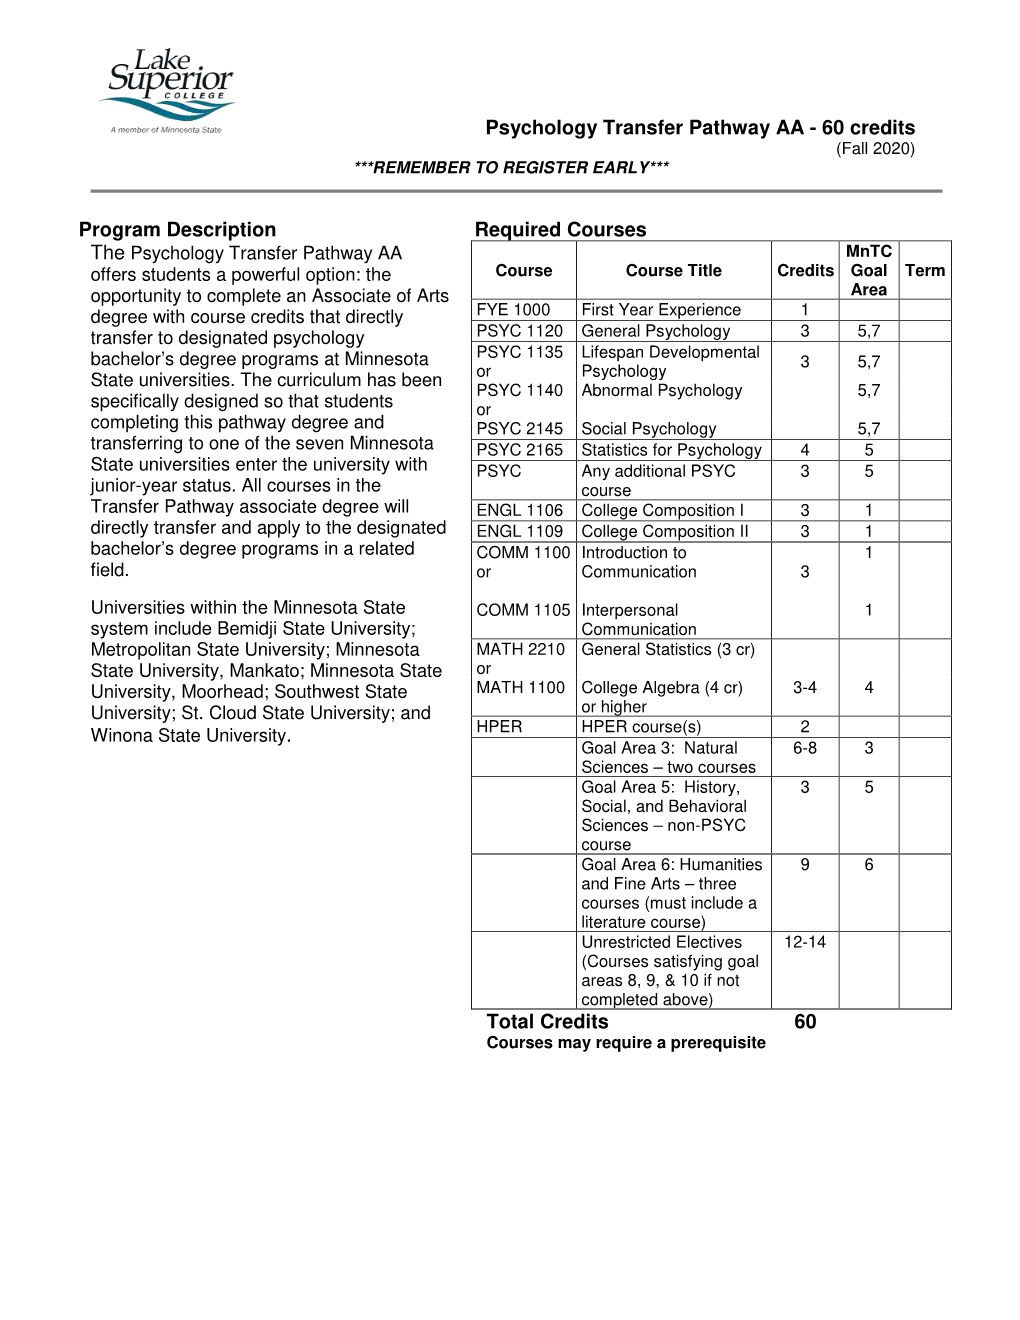 Psychology Transfer Pathway Program Guide